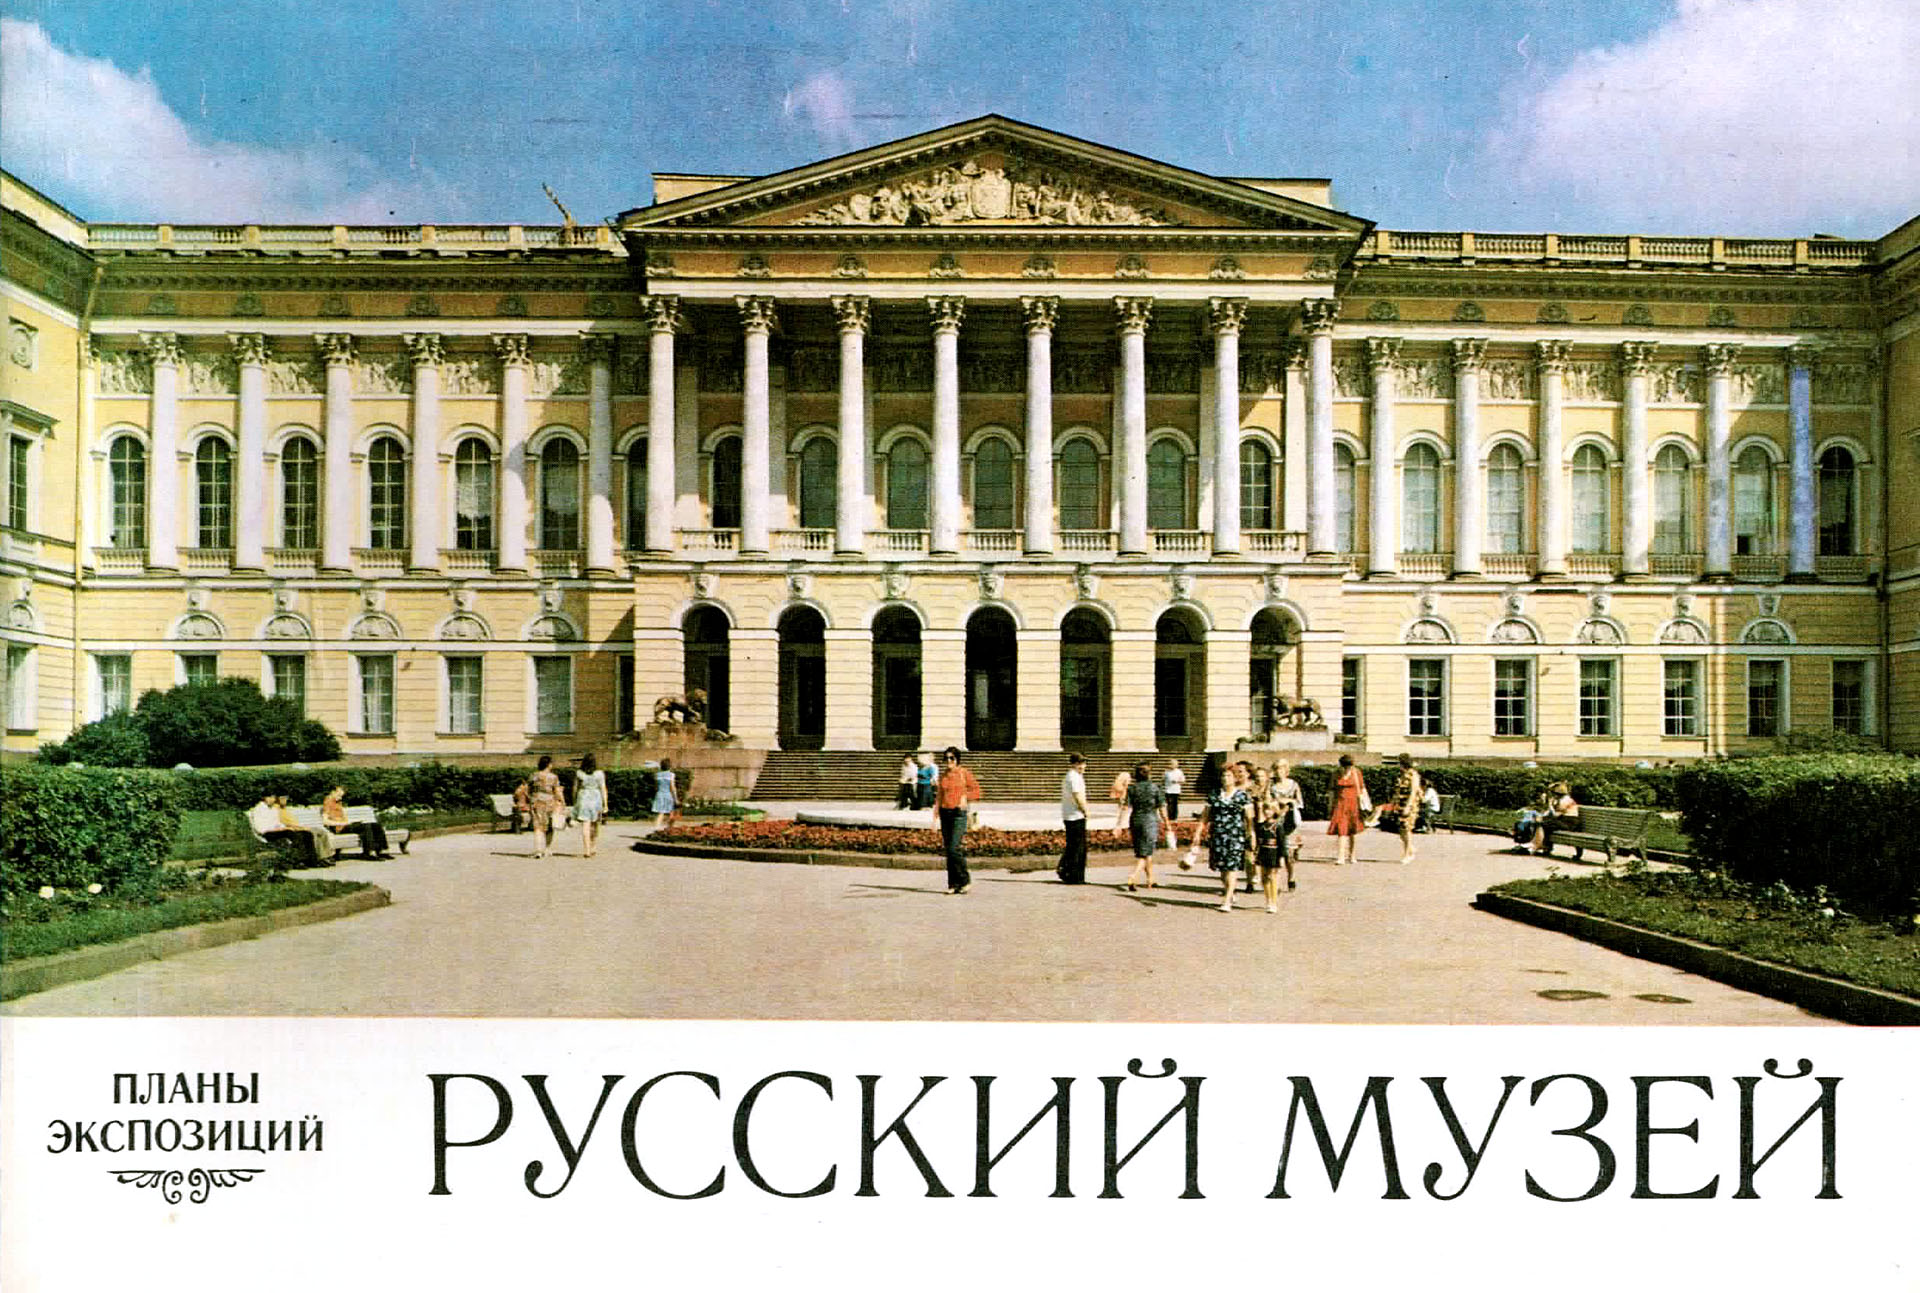 Russisches Museum - Leningrad (St. Petersburg) - Lapina, Irina Pavlovna